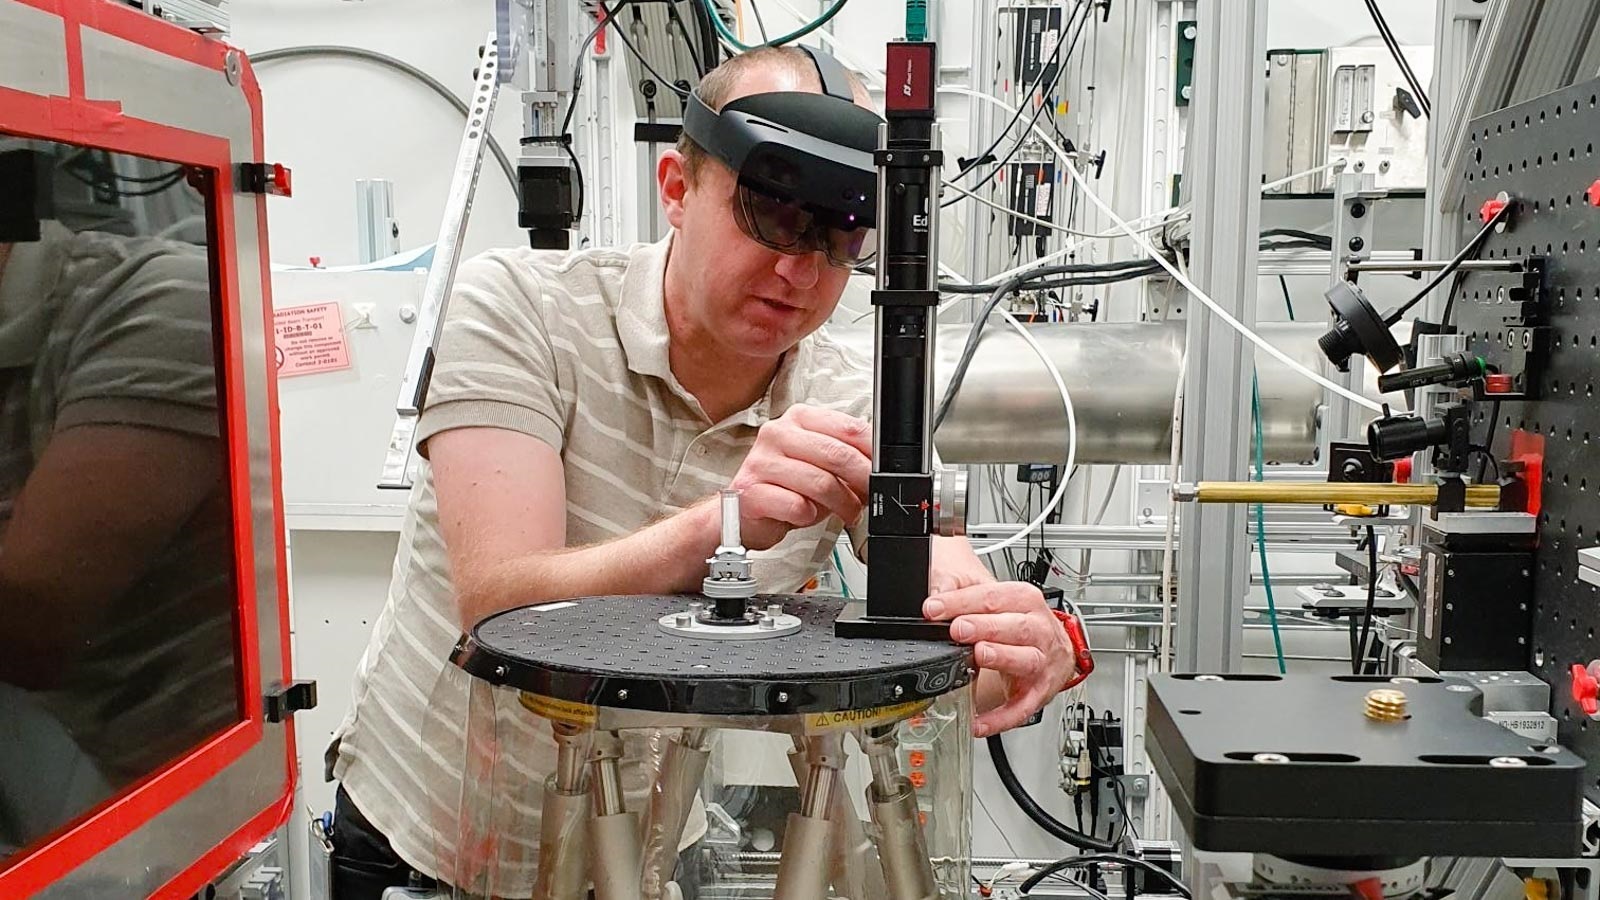 Photograph of scientist using technology. (Image by Uta Ruett, Argonne National Laboratory.)